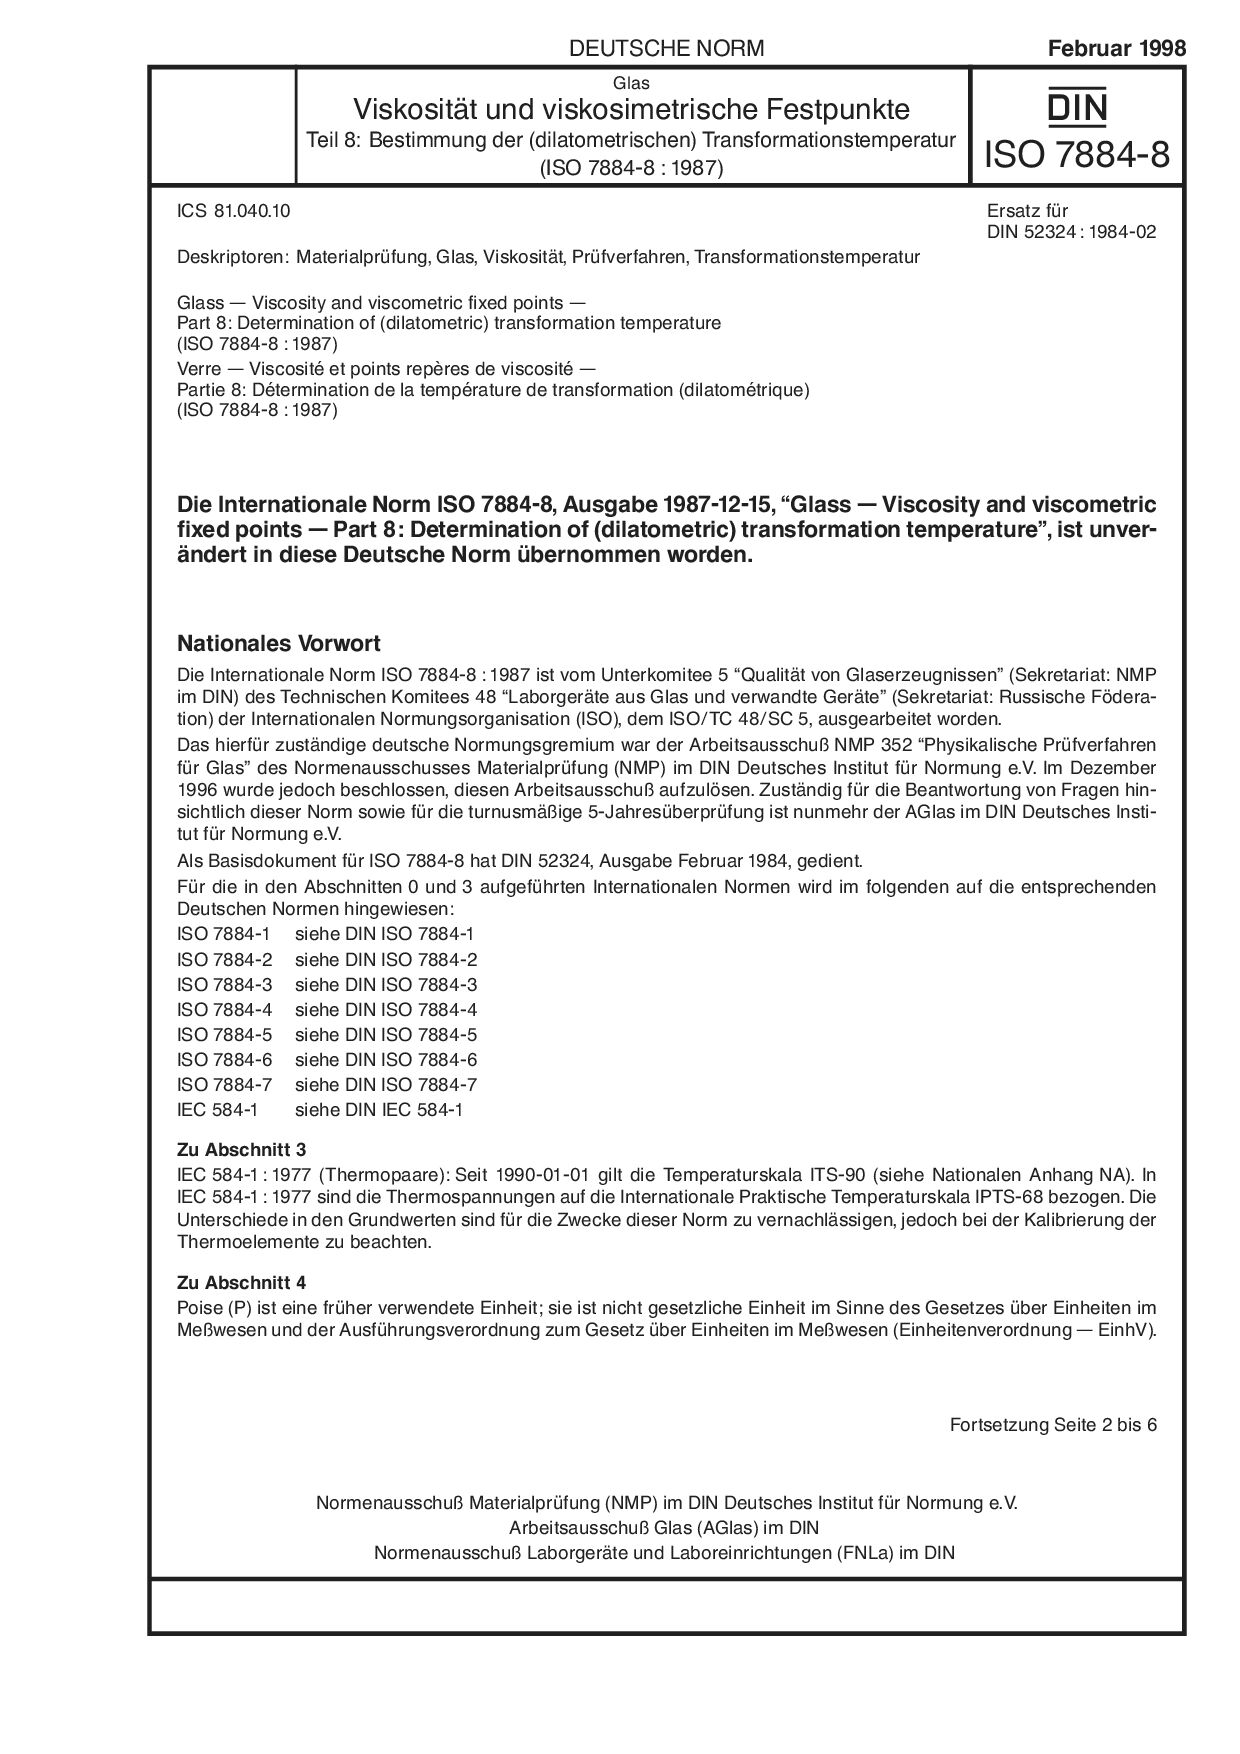 DIN ISO 7884-8:1998